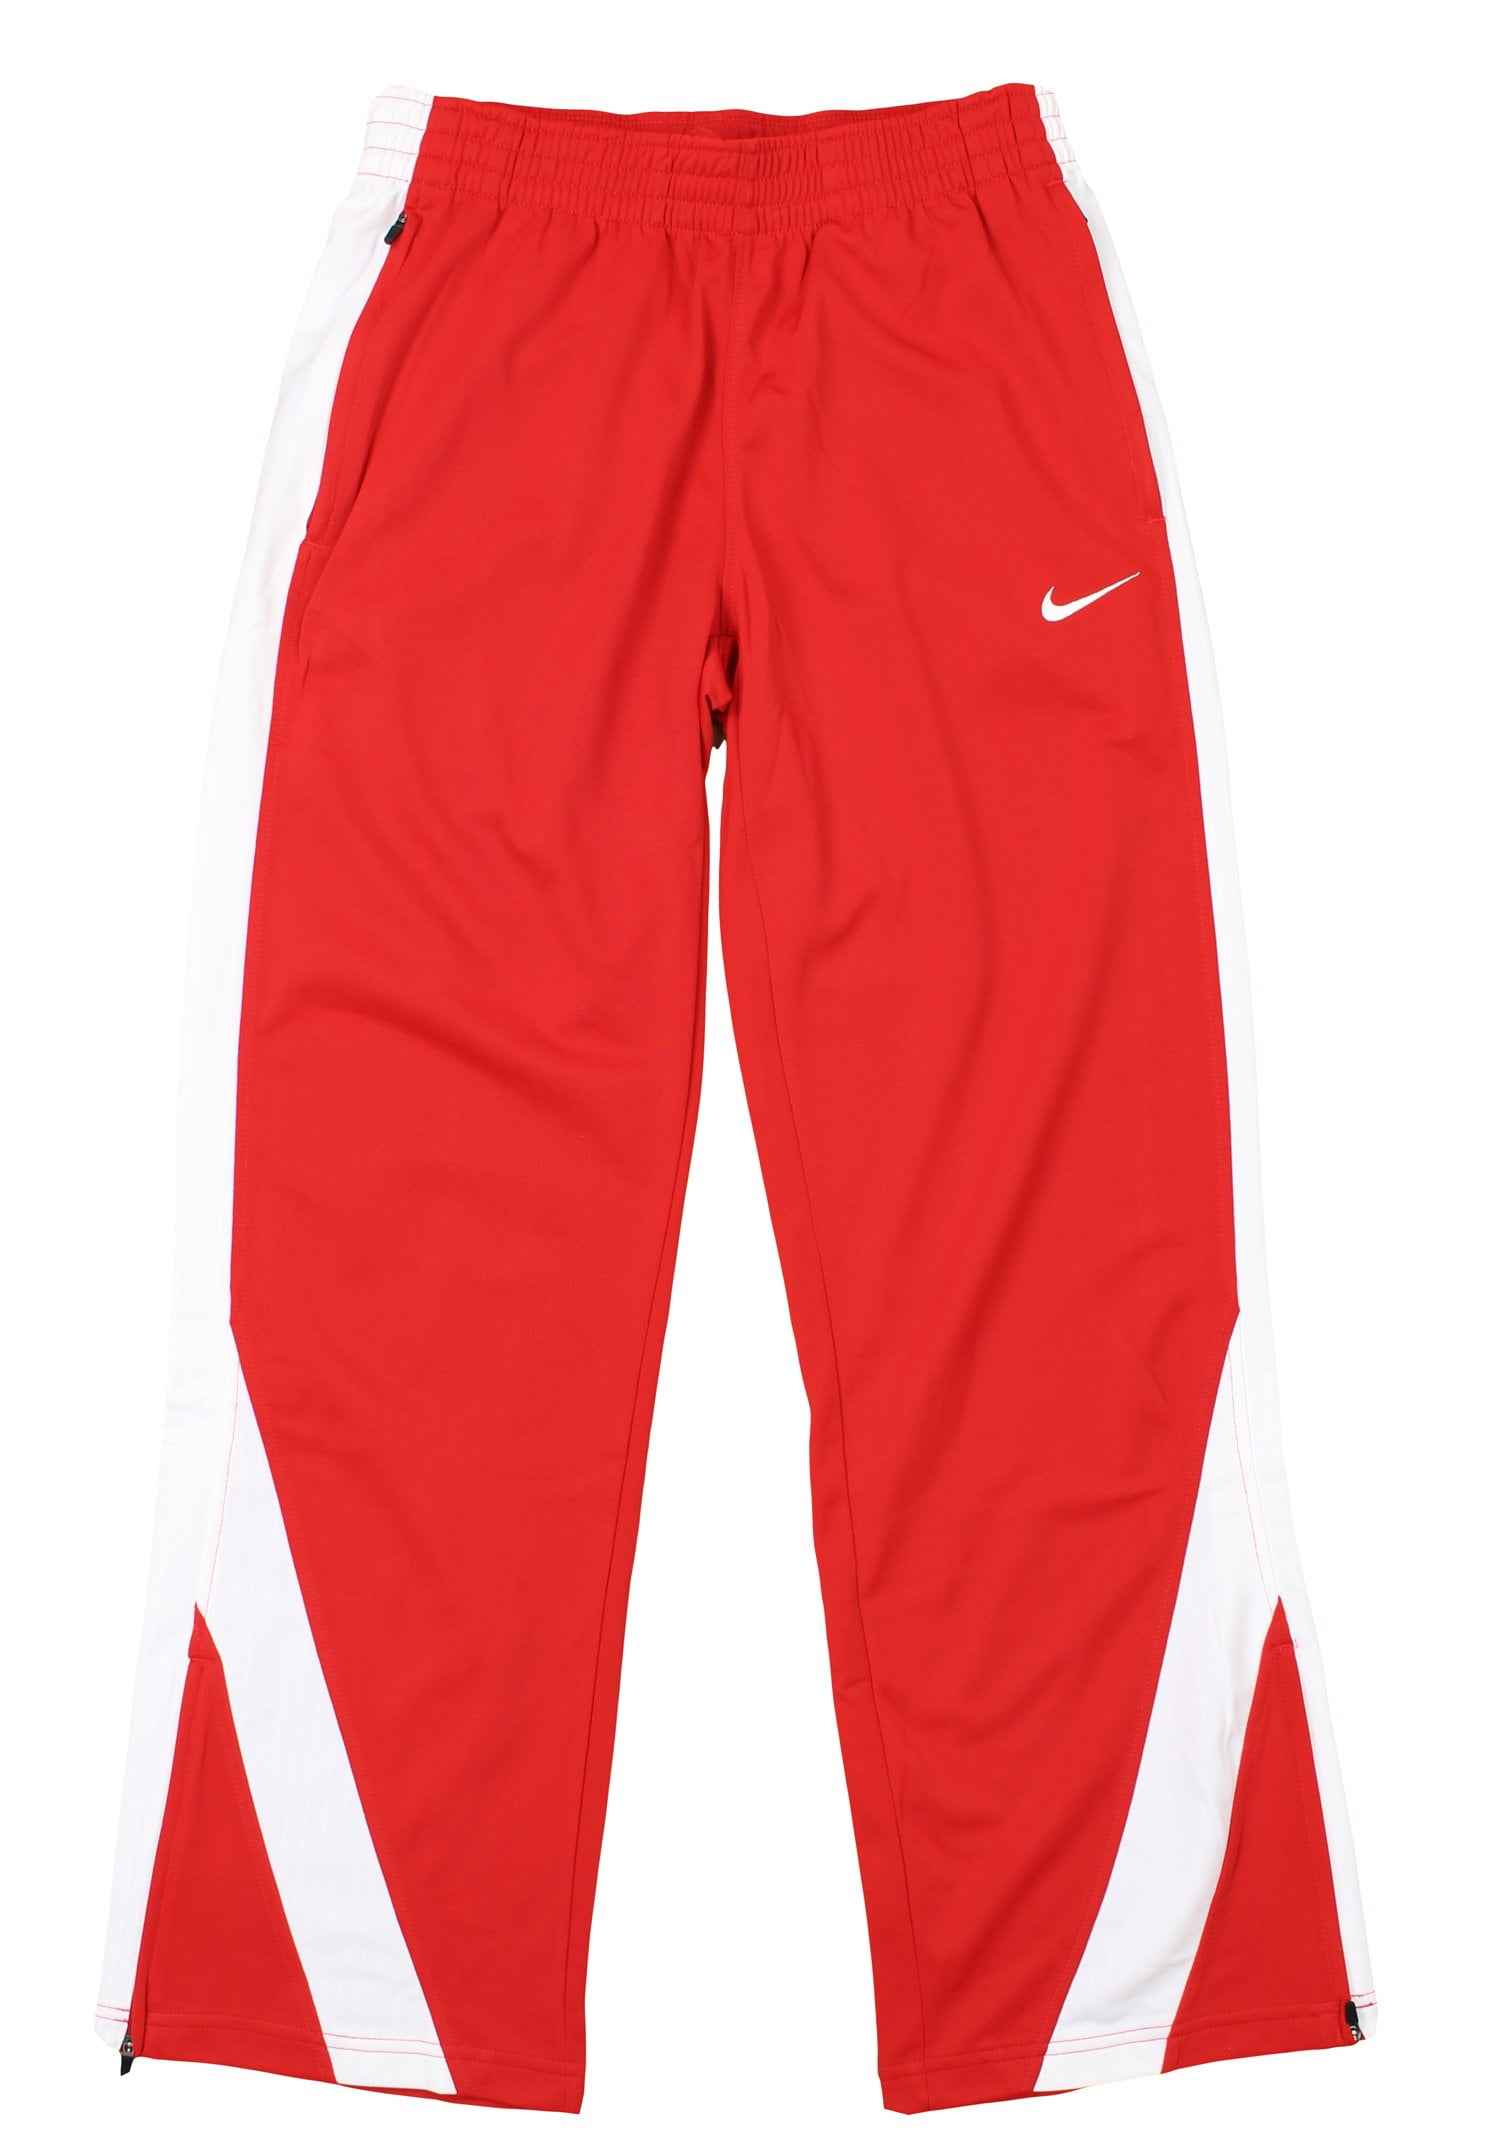 Nike Nike Women S Franchise Warm Up Pants Many Colors Walmart Com Walmart Com